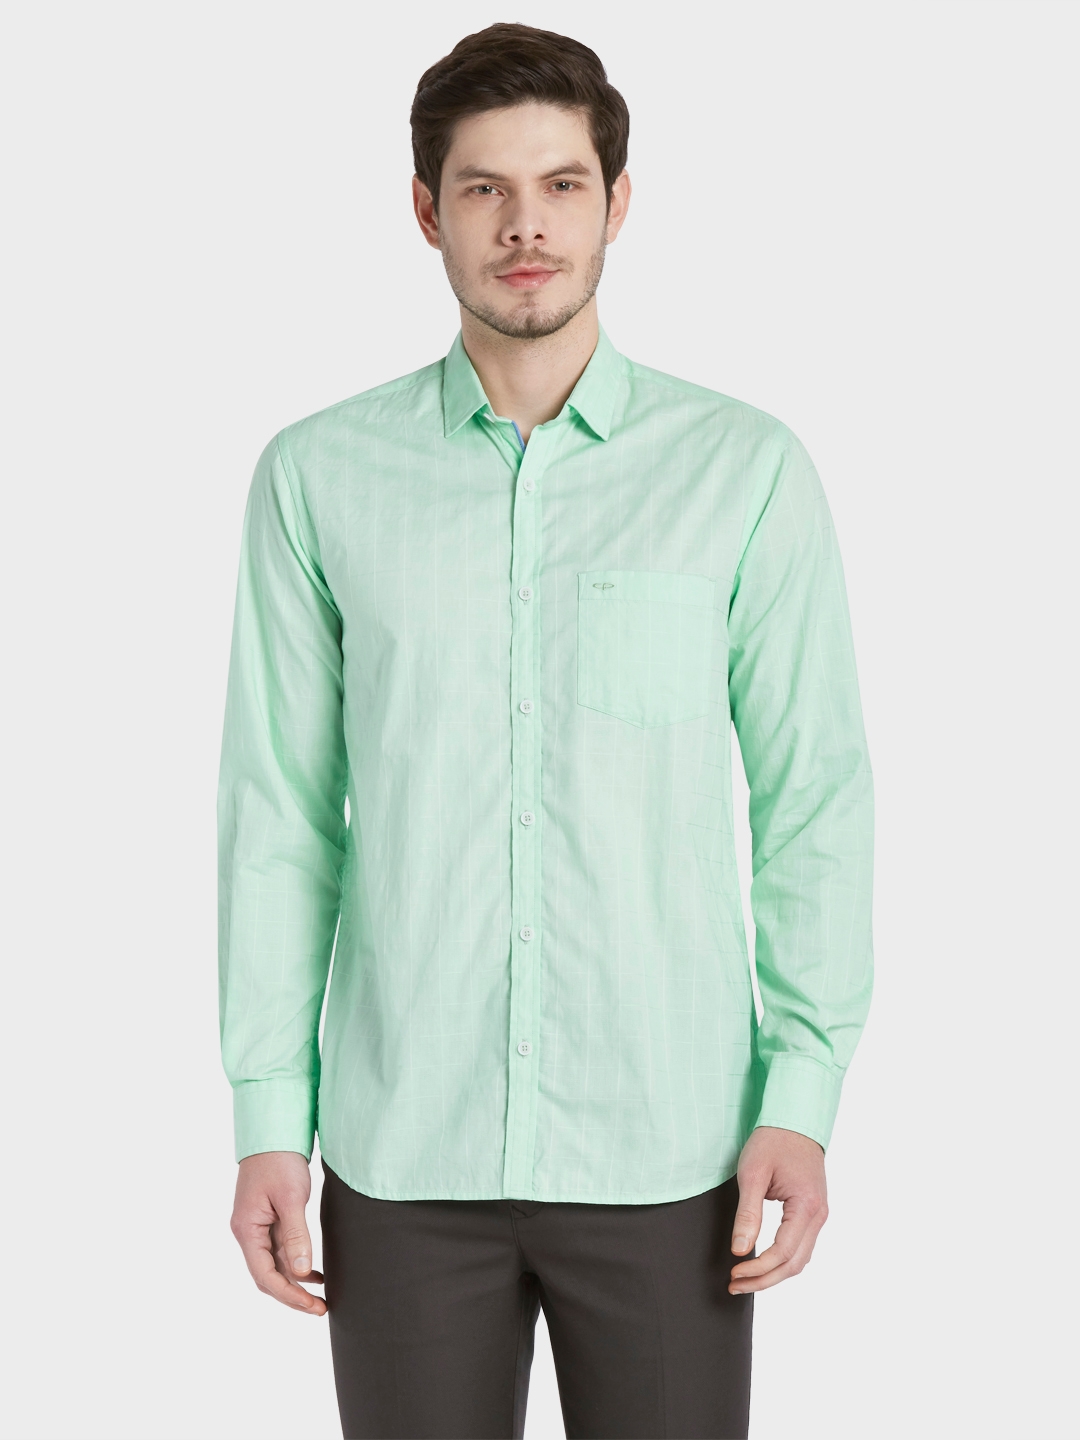 ColorPlus Green Shirt